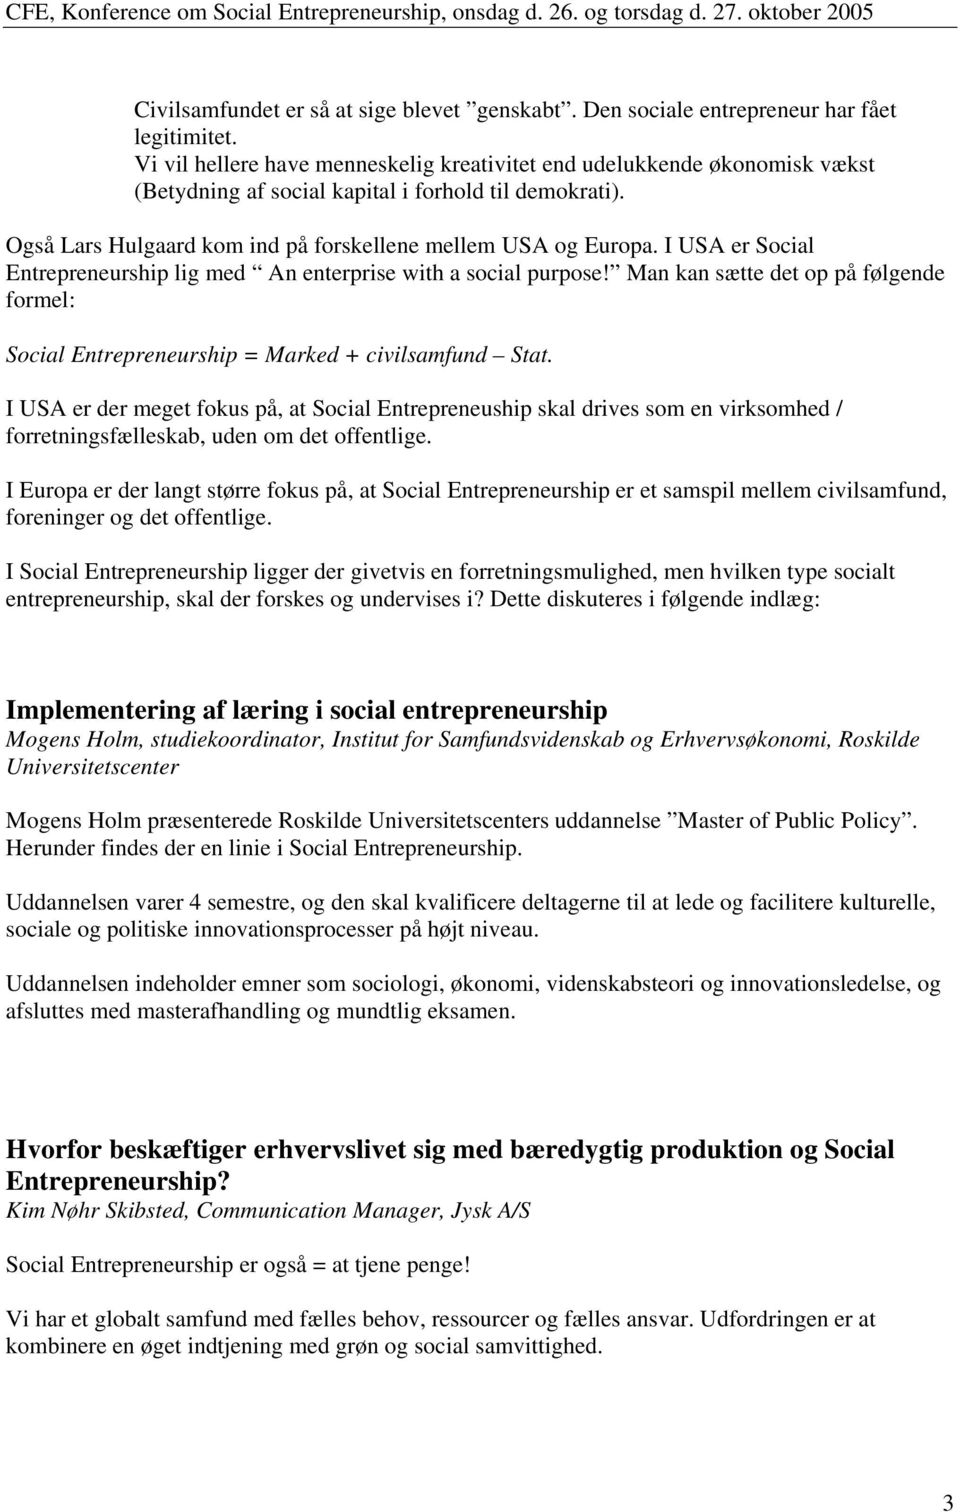 I USA er Social Entrepreneurship lig med An enterprise with a social purpose! Man kan sætte det op på følgende formel: Social Entrepreneurship = Marked + civilsamfund Stat.